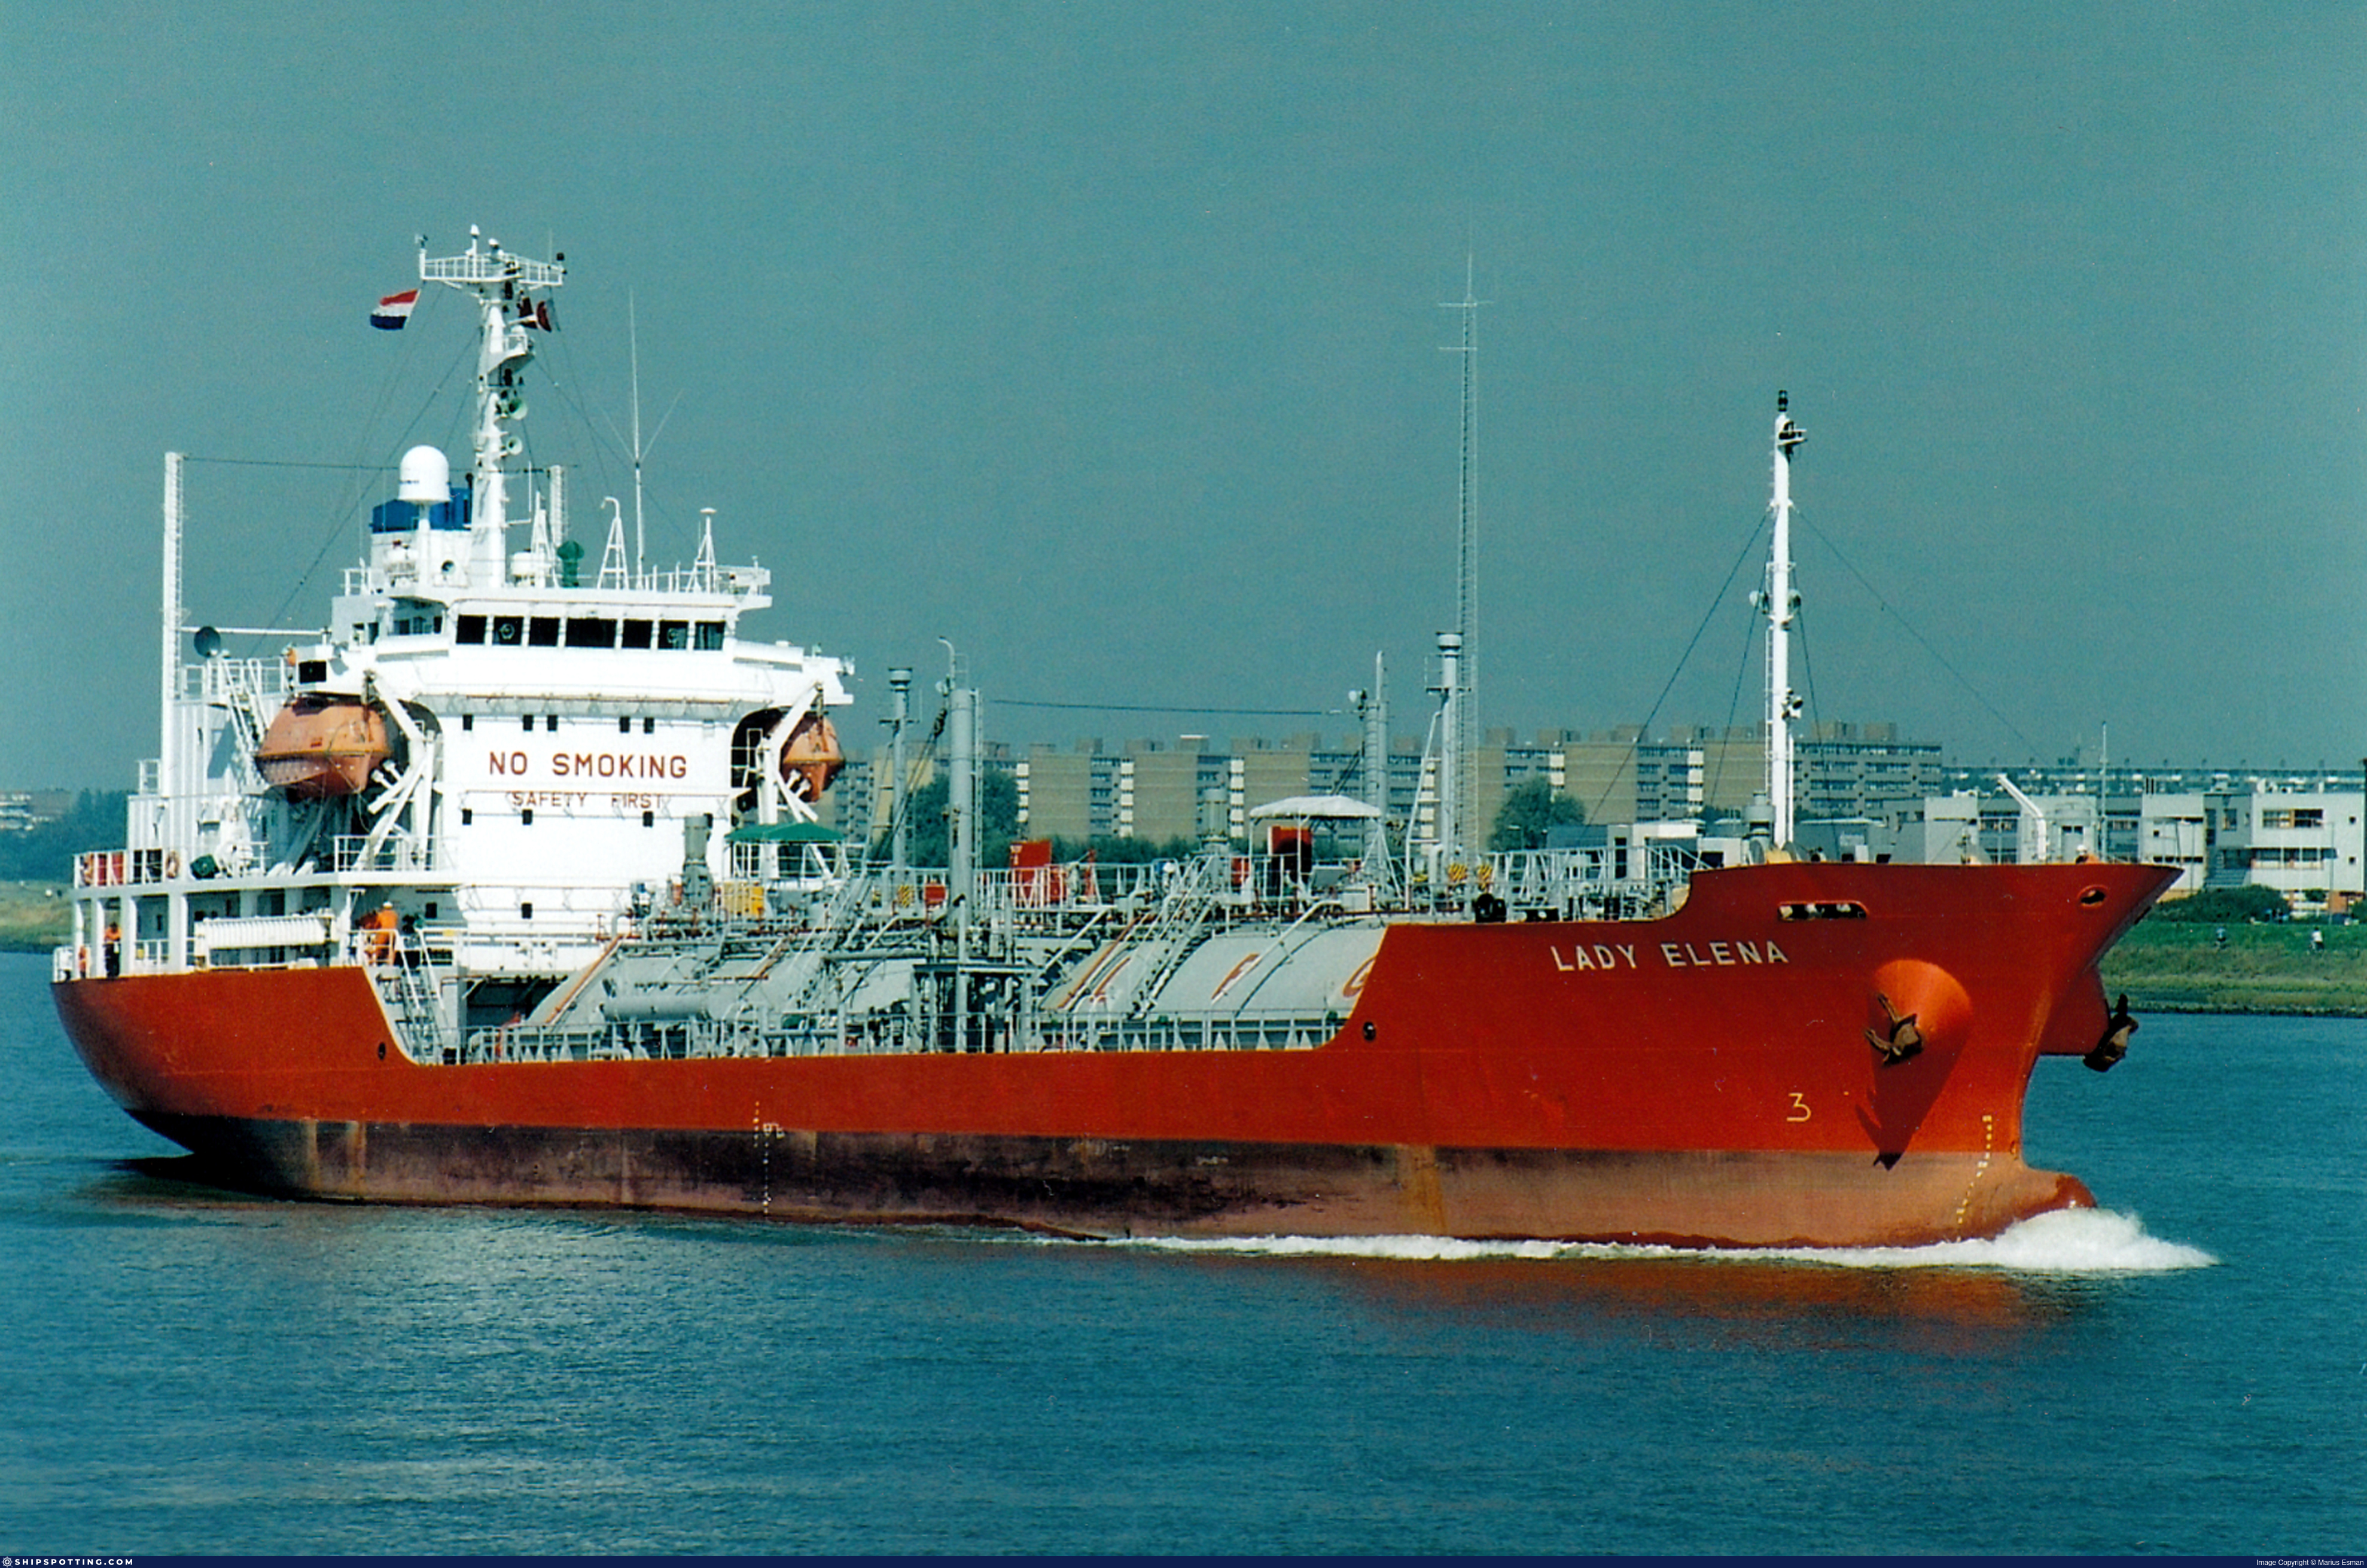 LADY ELENA - IMO 9167409 - ShipSpotting.com - Ship Photos, Information,  Videos and Ship Tracker